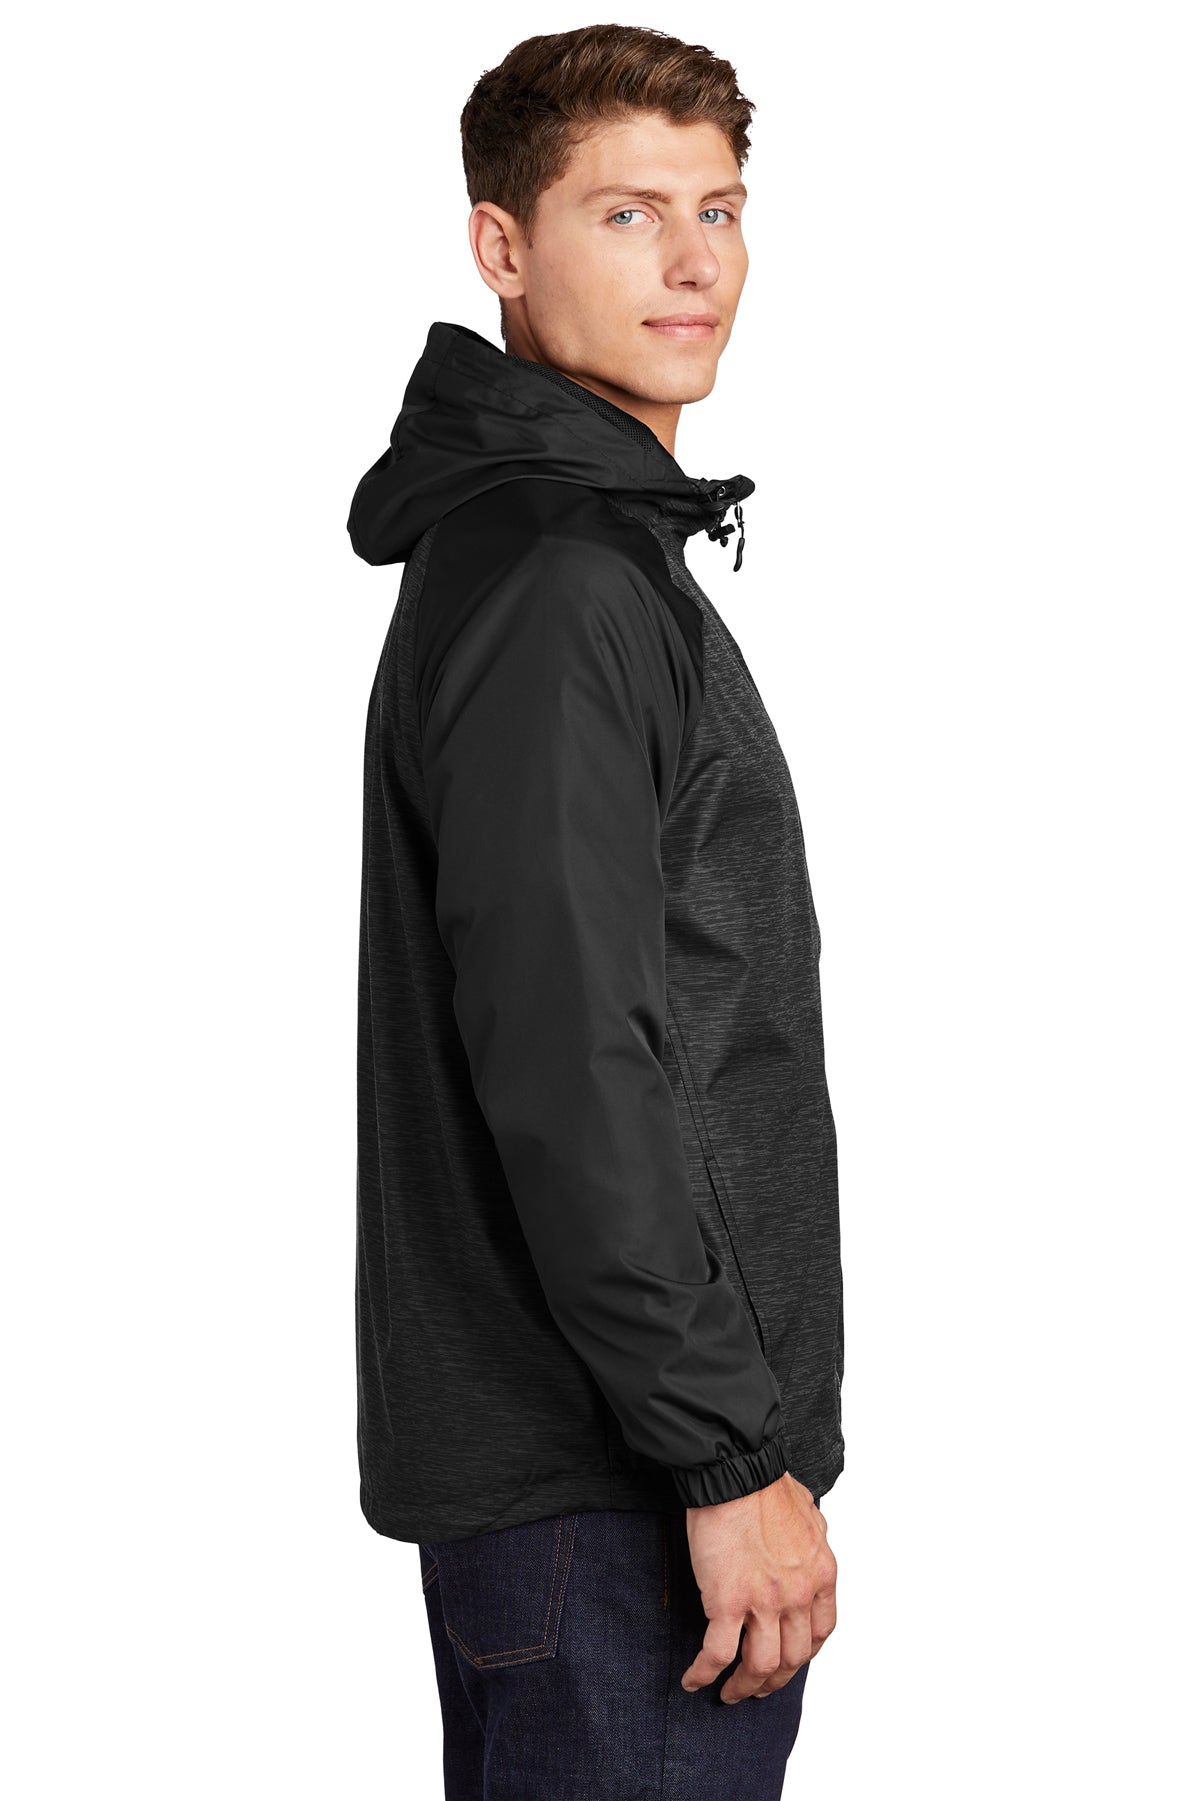 sport-tek_jst40 _black heather/ black_company_logo_jackets